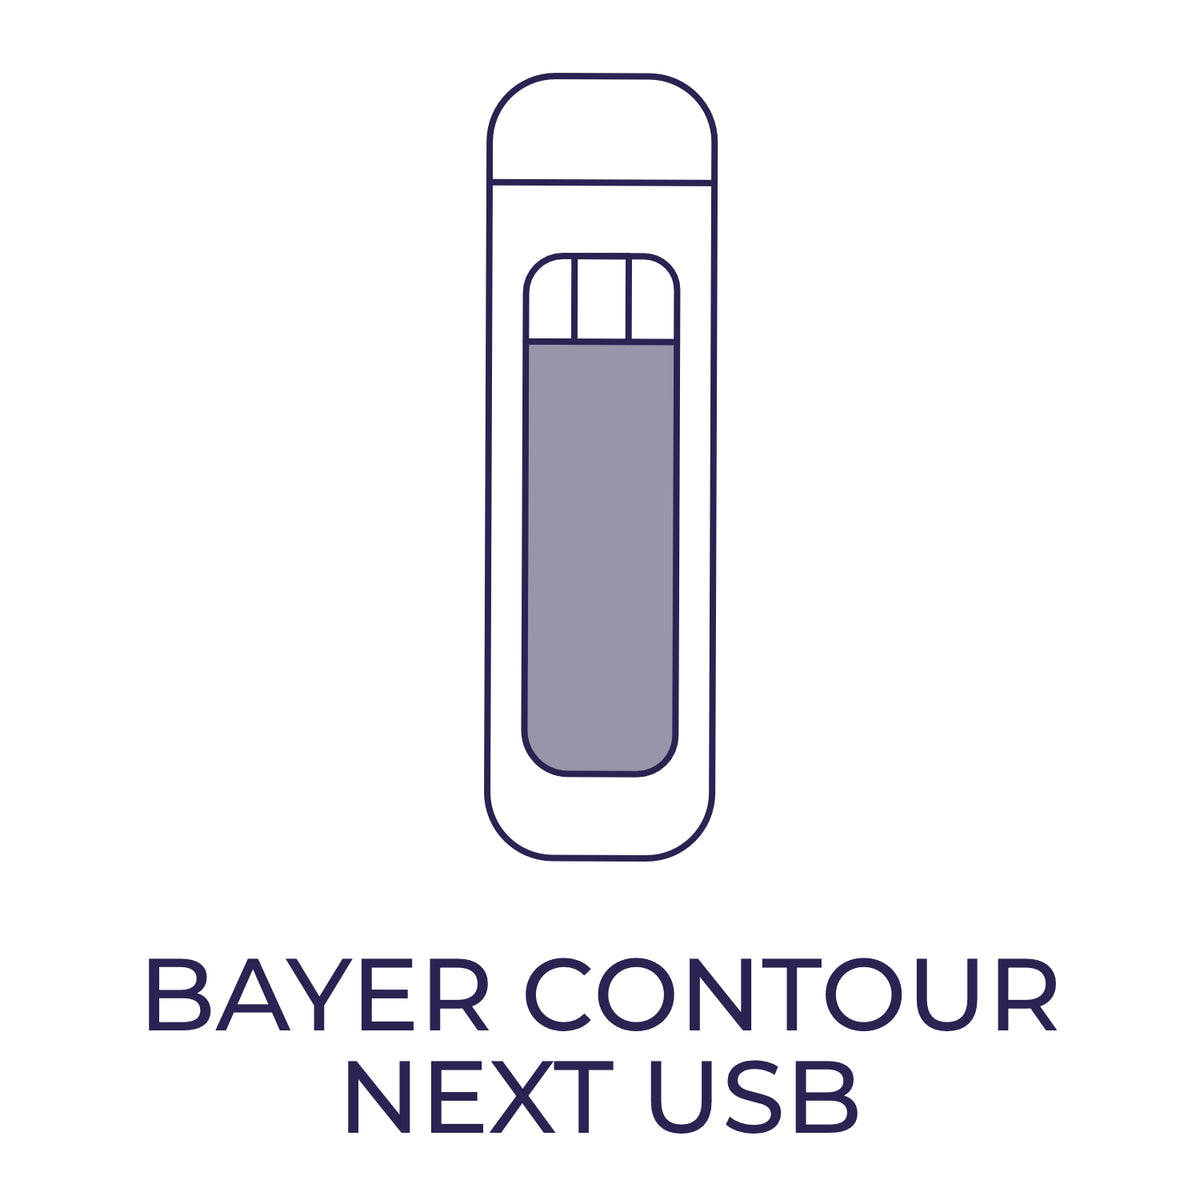 BayerContourNextUsb2.jpg__PID:c18b069f-7a44-4bc7-af03-2356b22e8b7c